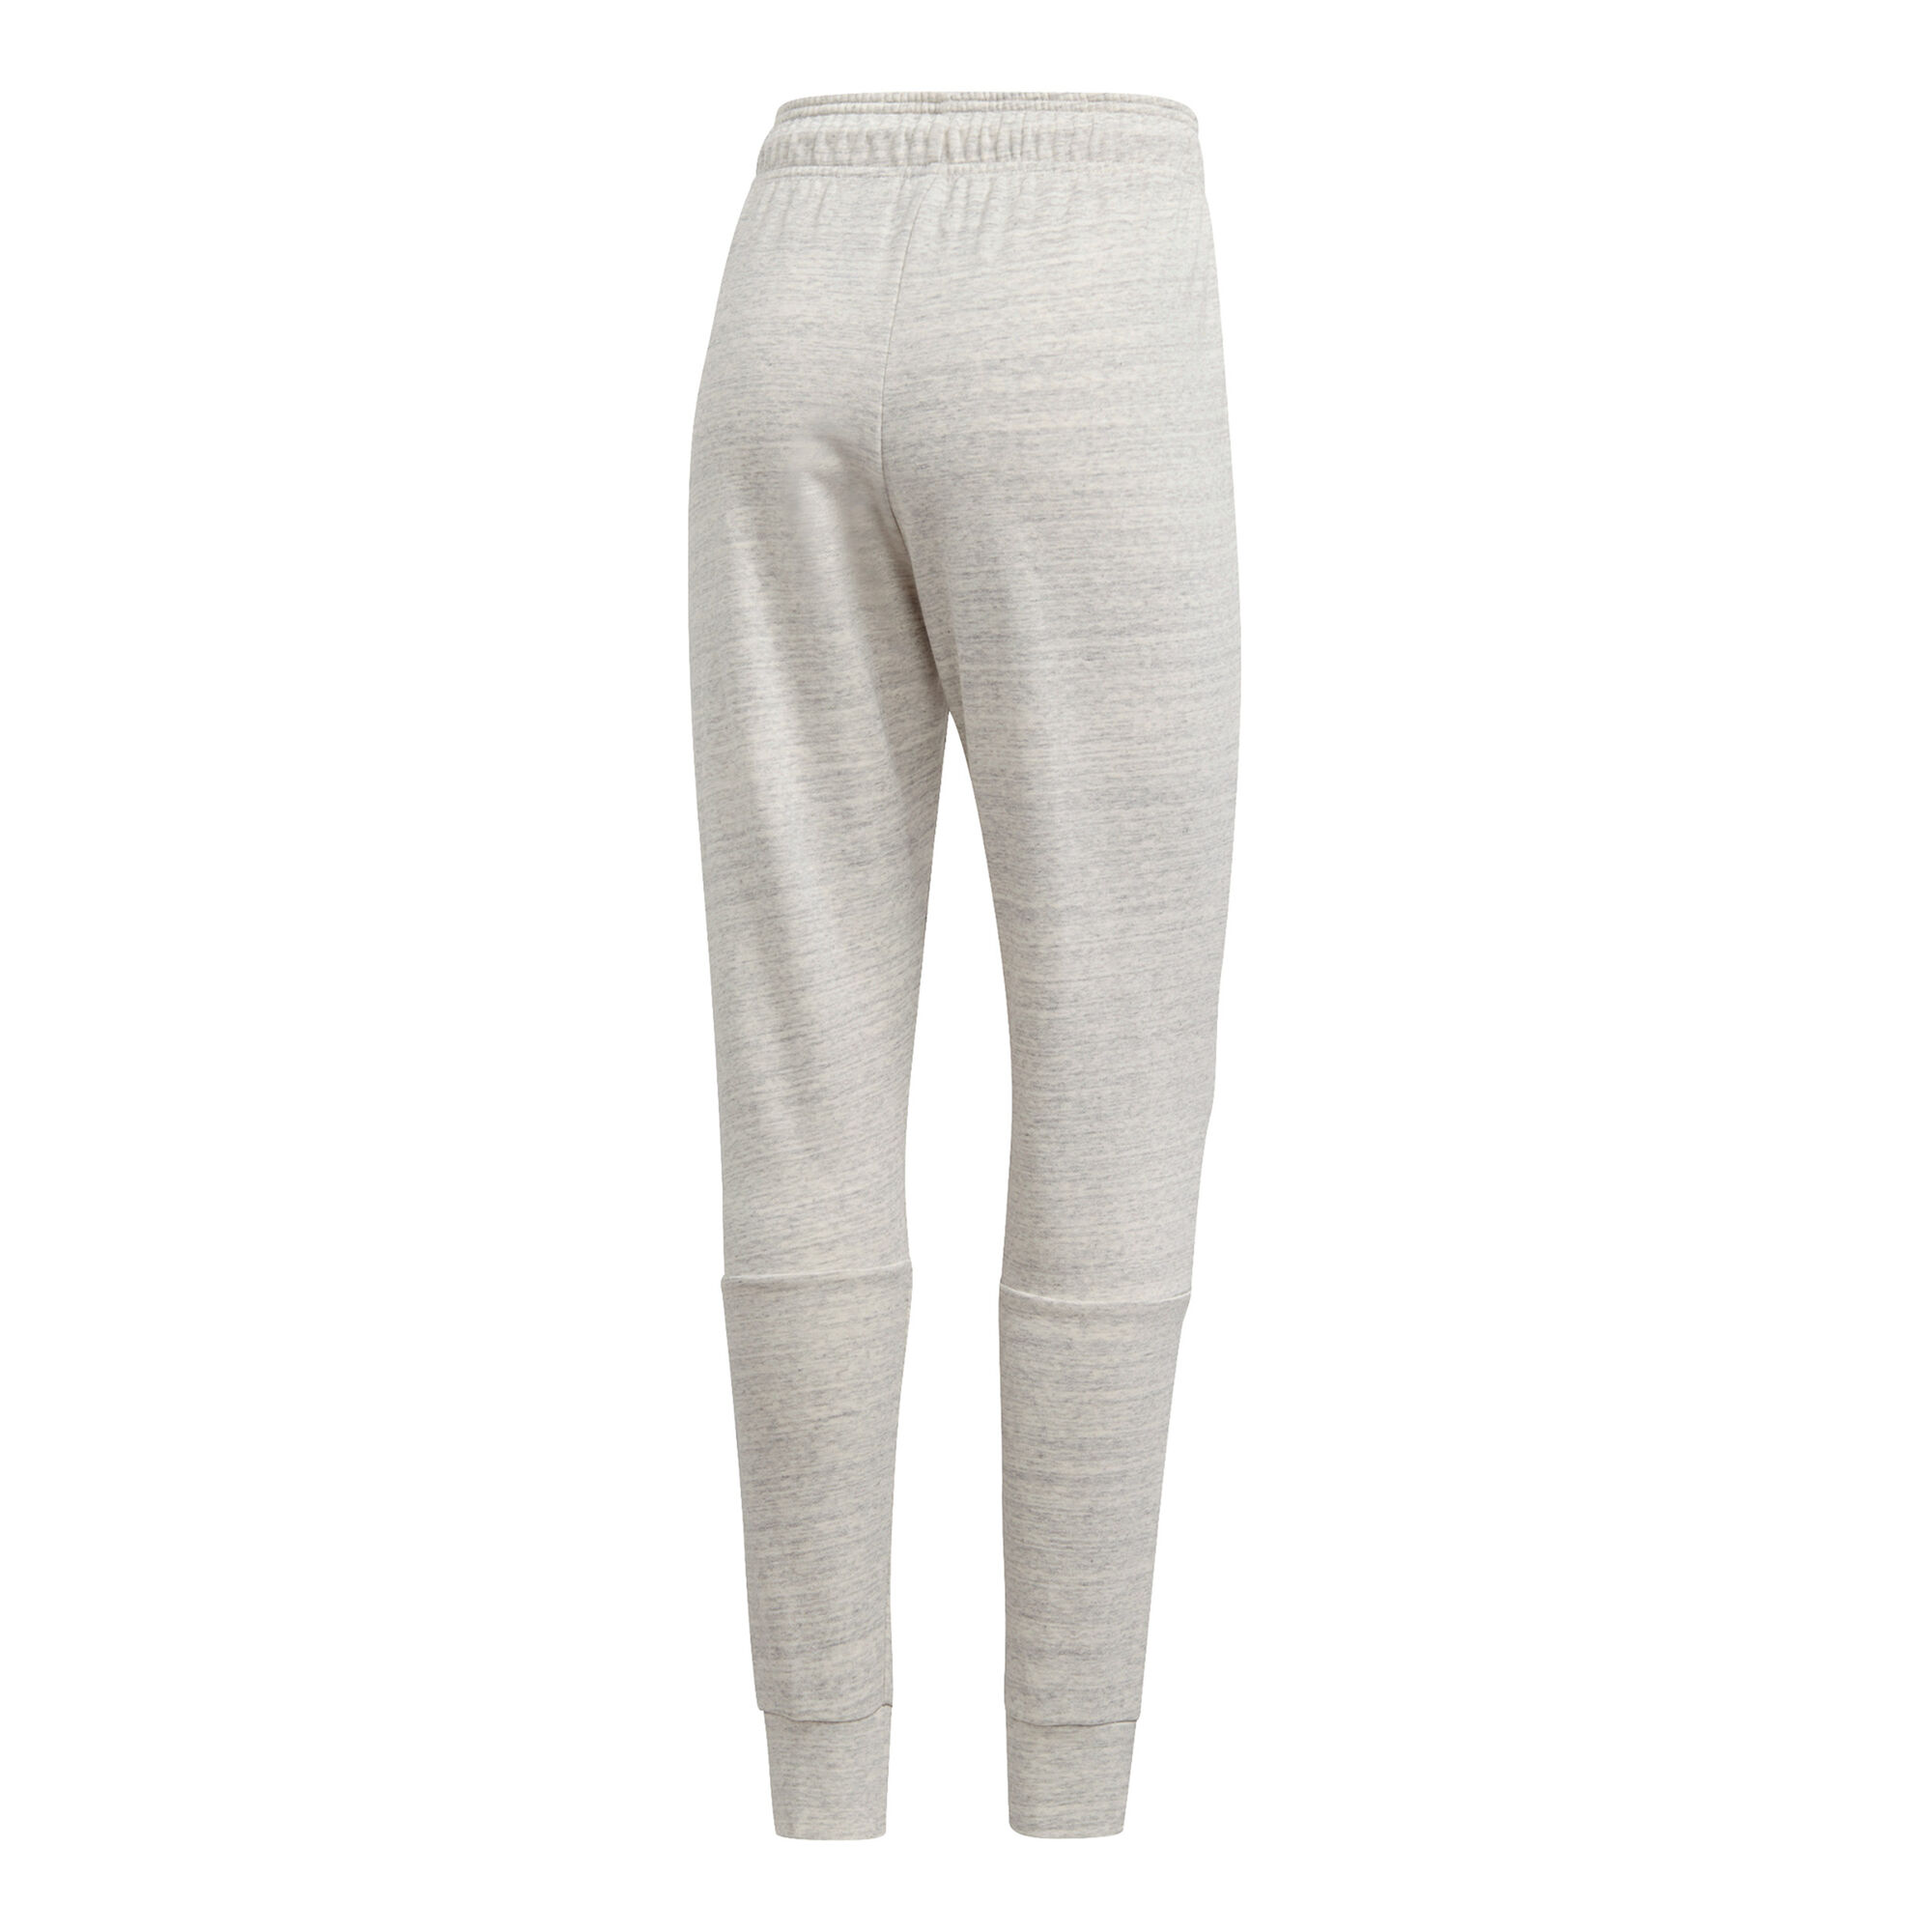 Bench Leggings - Trousers - cream/white - Zalando.de